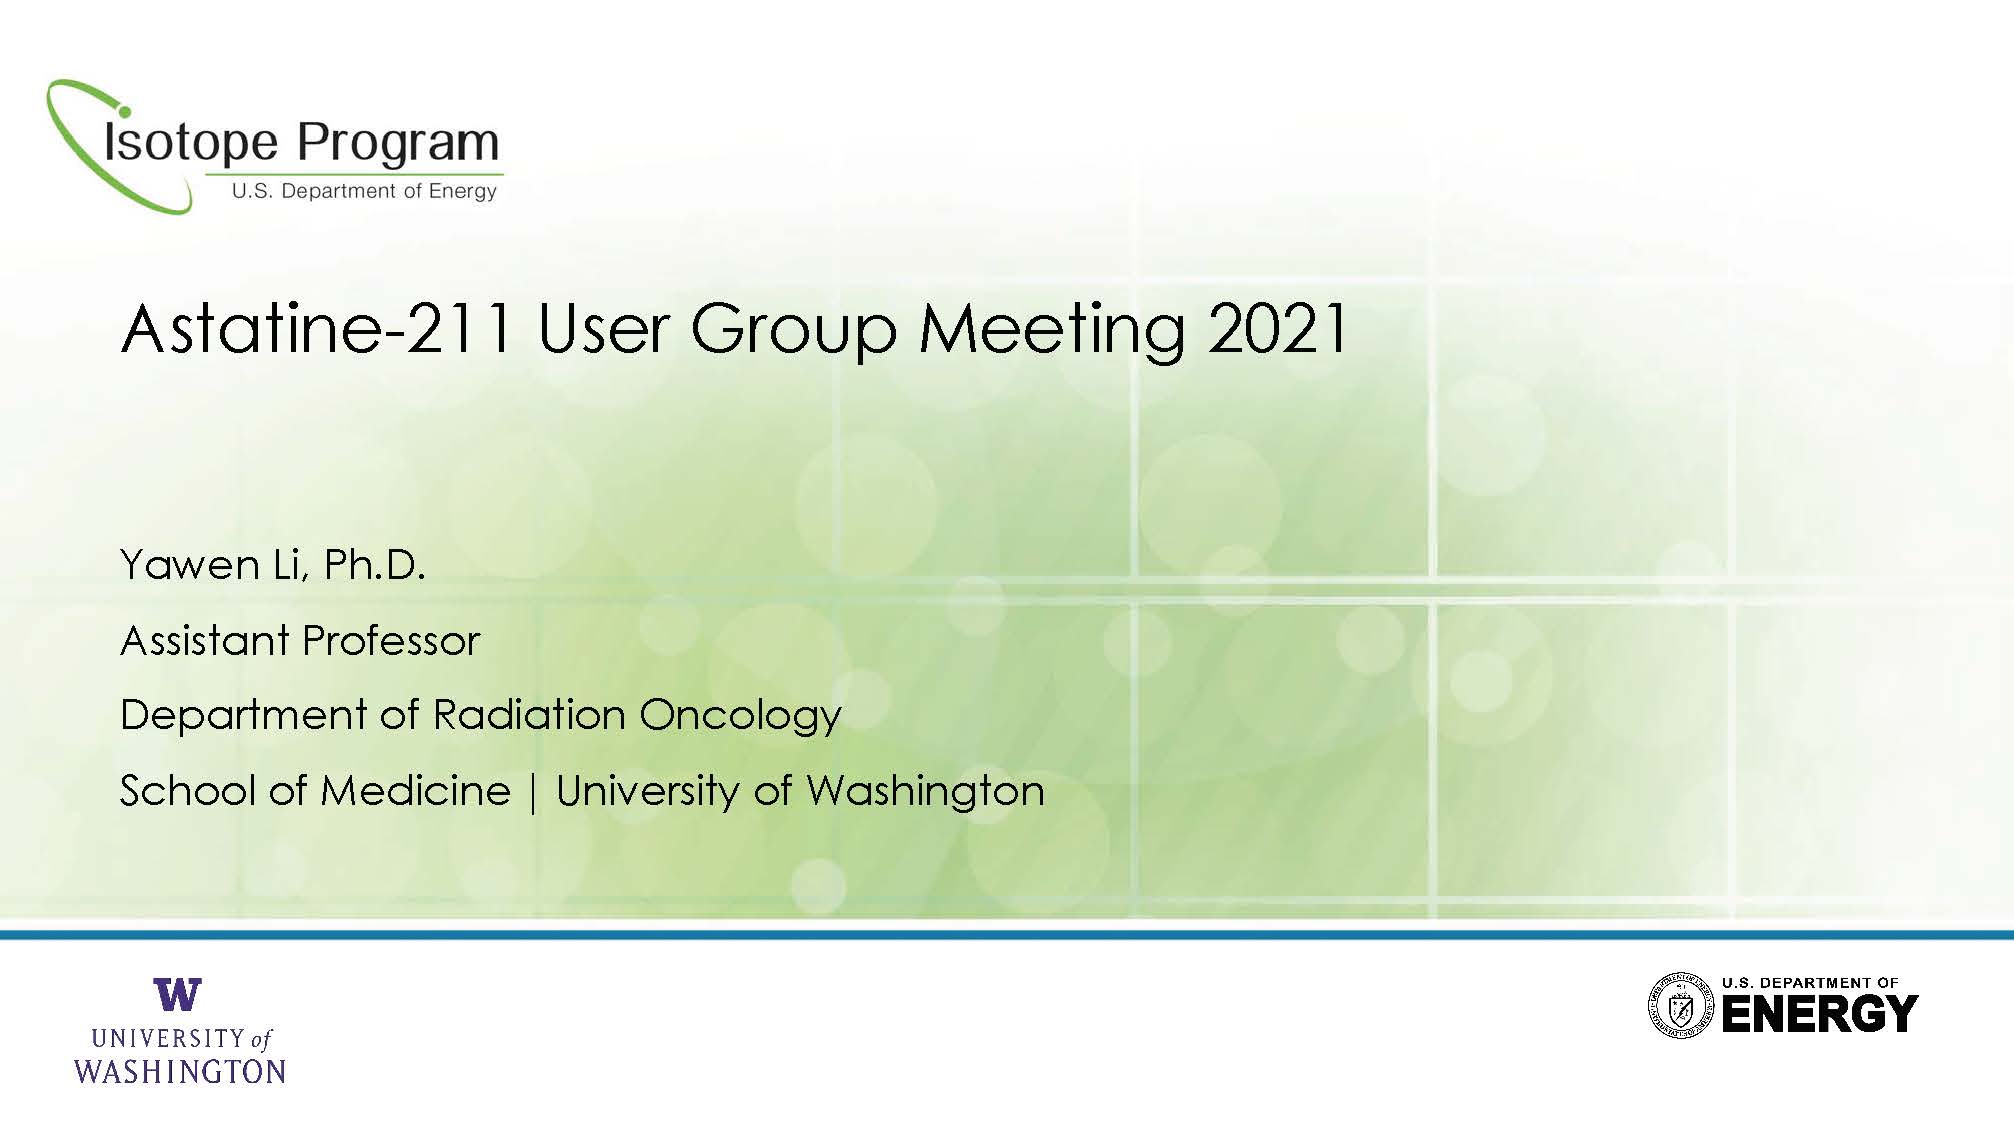 At-211 User Group Meeting 2021 by Drs. Yawen Li and Rob Emery, University of Washington